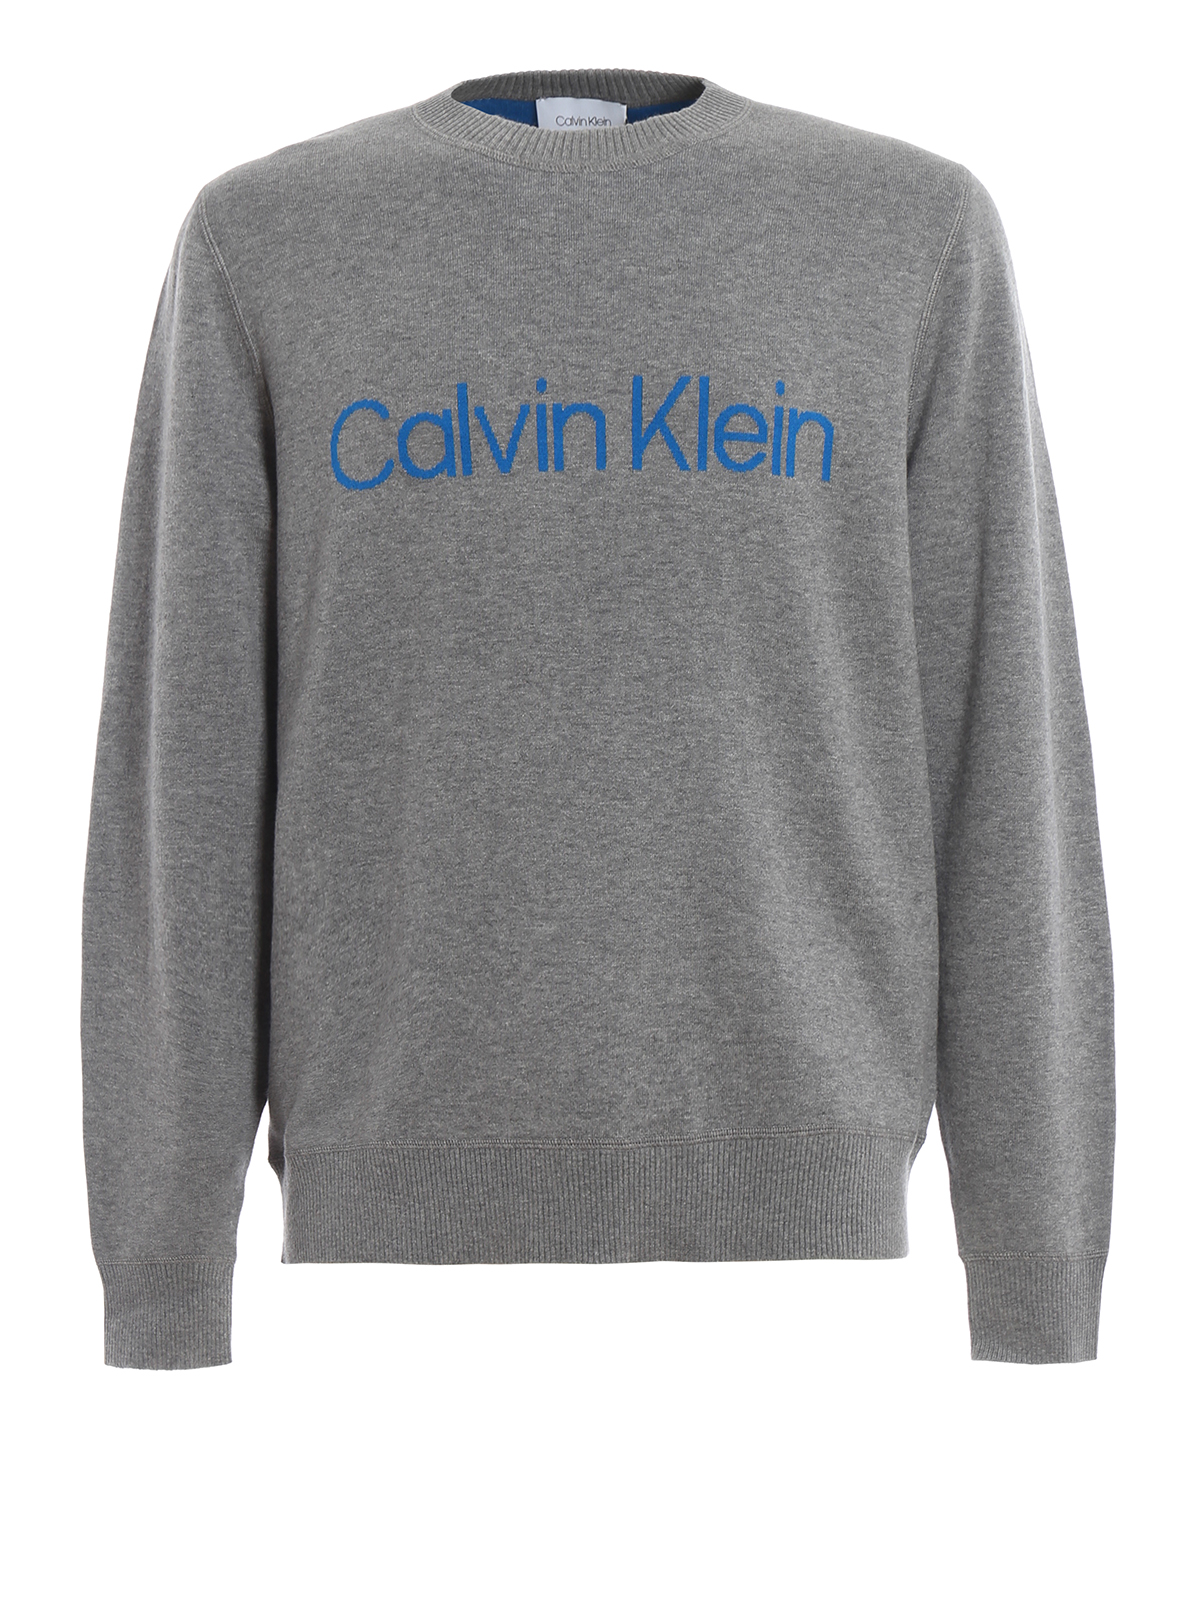 Plantación Persona responsable fe Suéteres con cuello pico Calvin Klein - Suéter Cuello Redondo - Gris -  K10K102997092